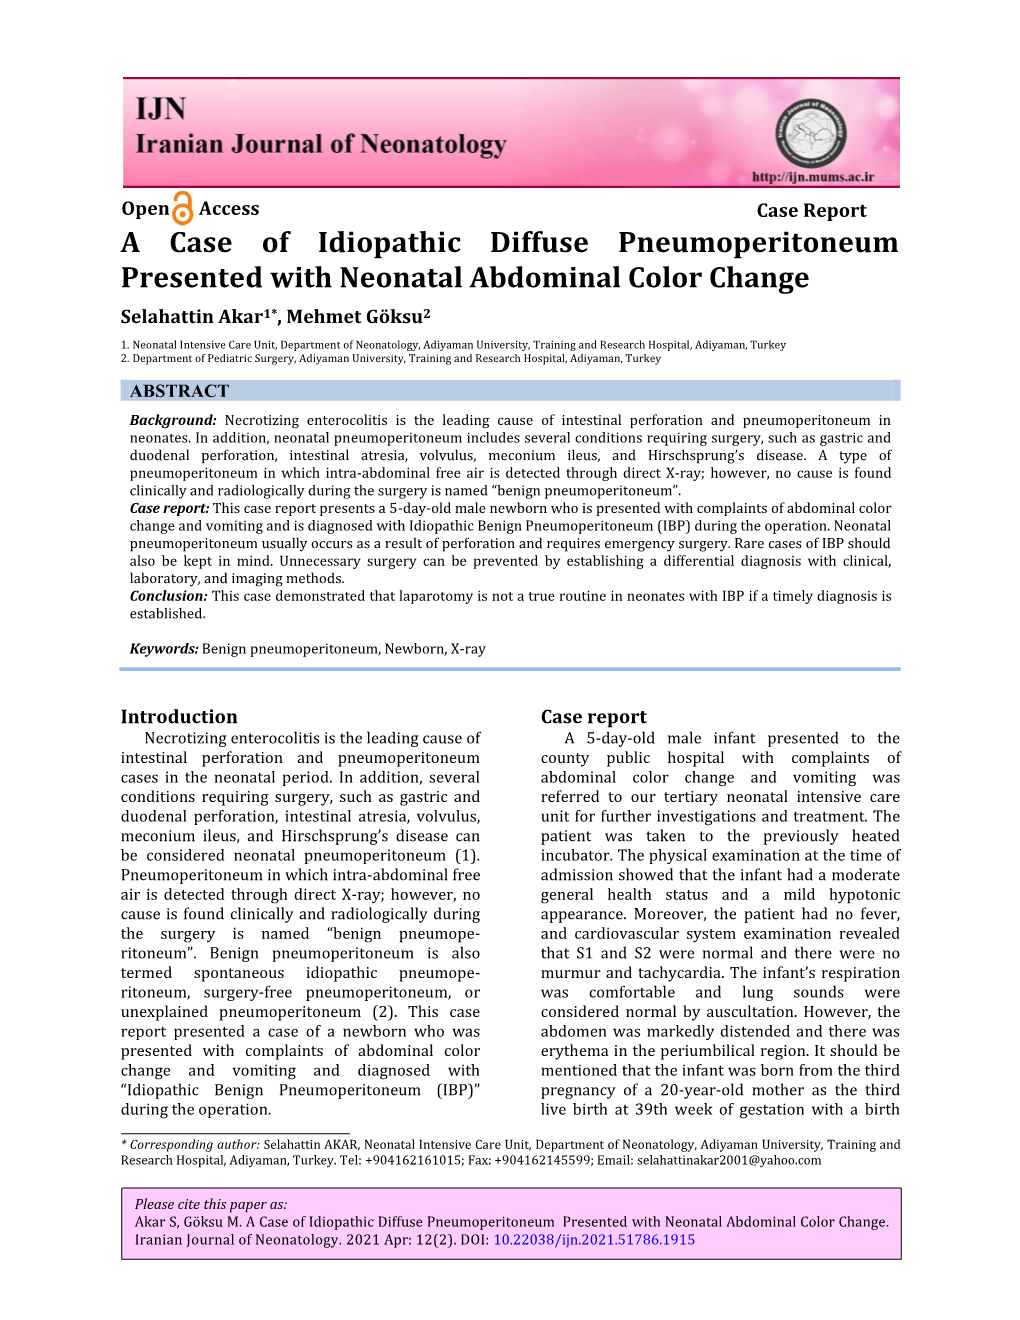 A Case of Idiopathic Diffuse Pneumoperitoneum Presented with Neonatal Abdominal Color Change Selahattin Akar1*, Mehmet Göksu2